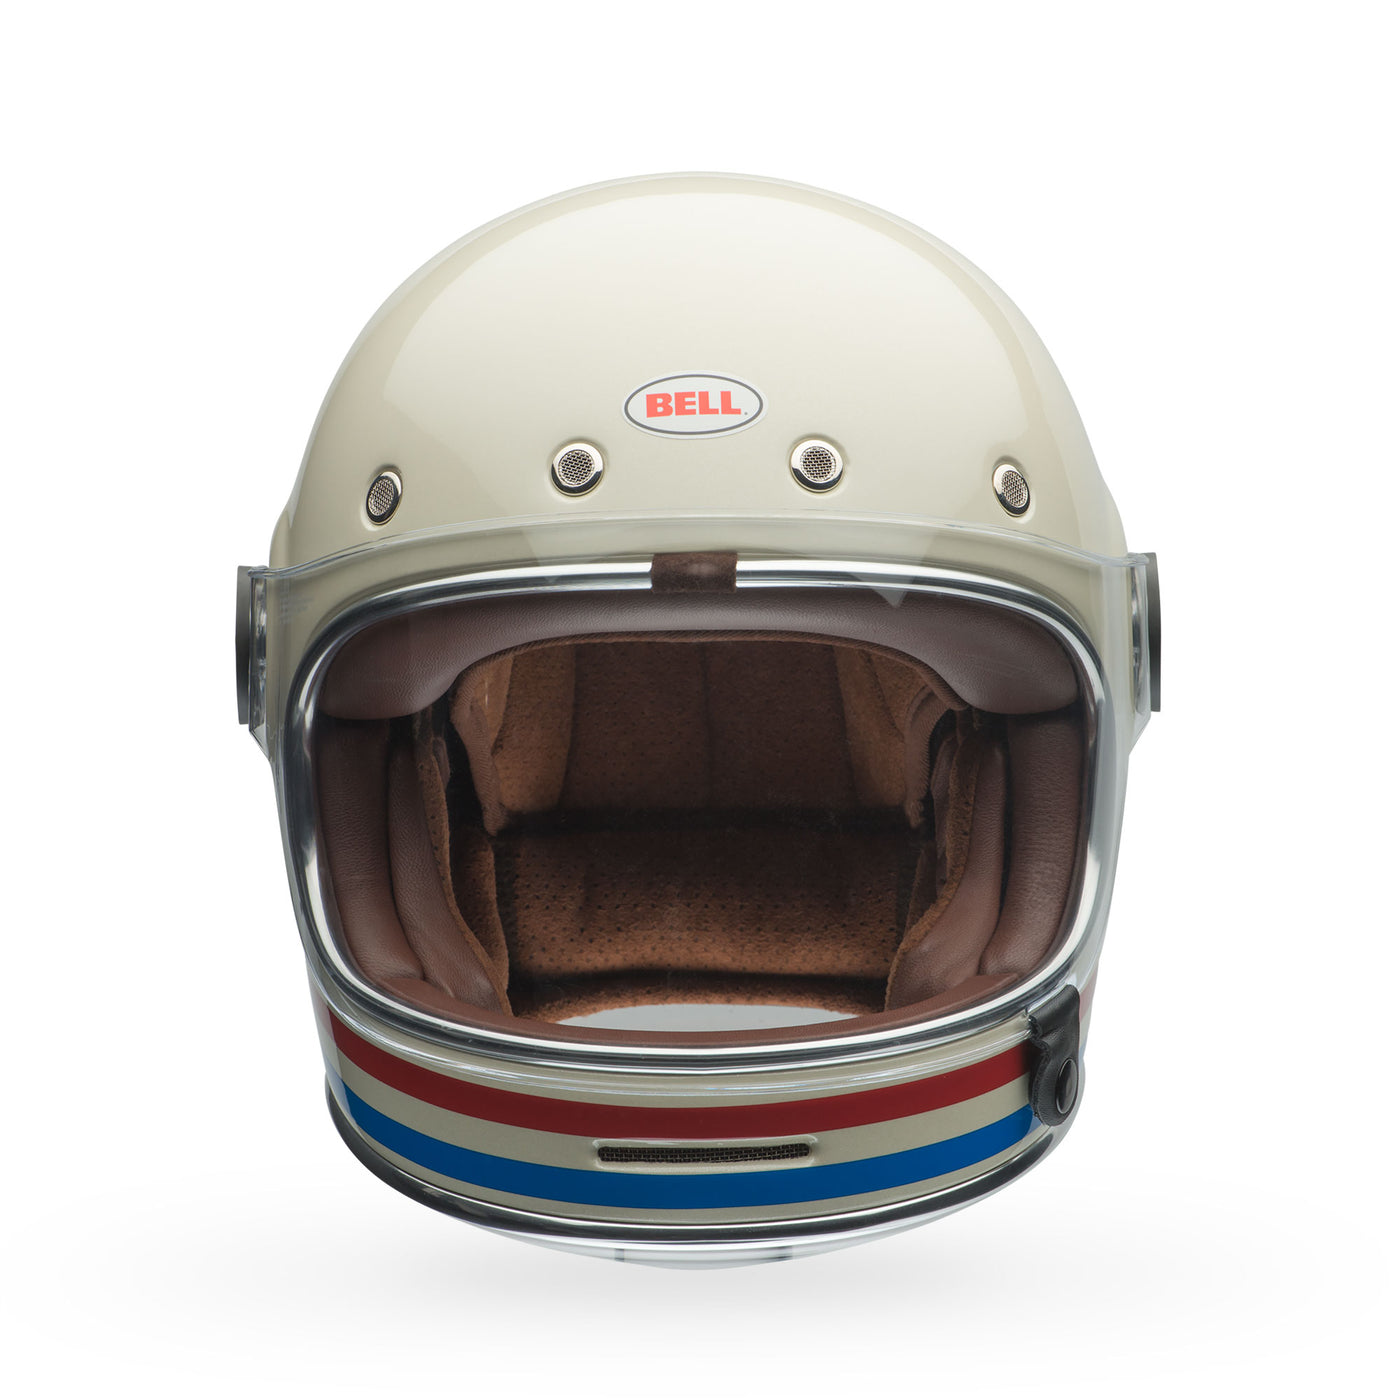 bell bullitt culture classic motorcycle helmet stripes gloss pearl white oxblood blue front